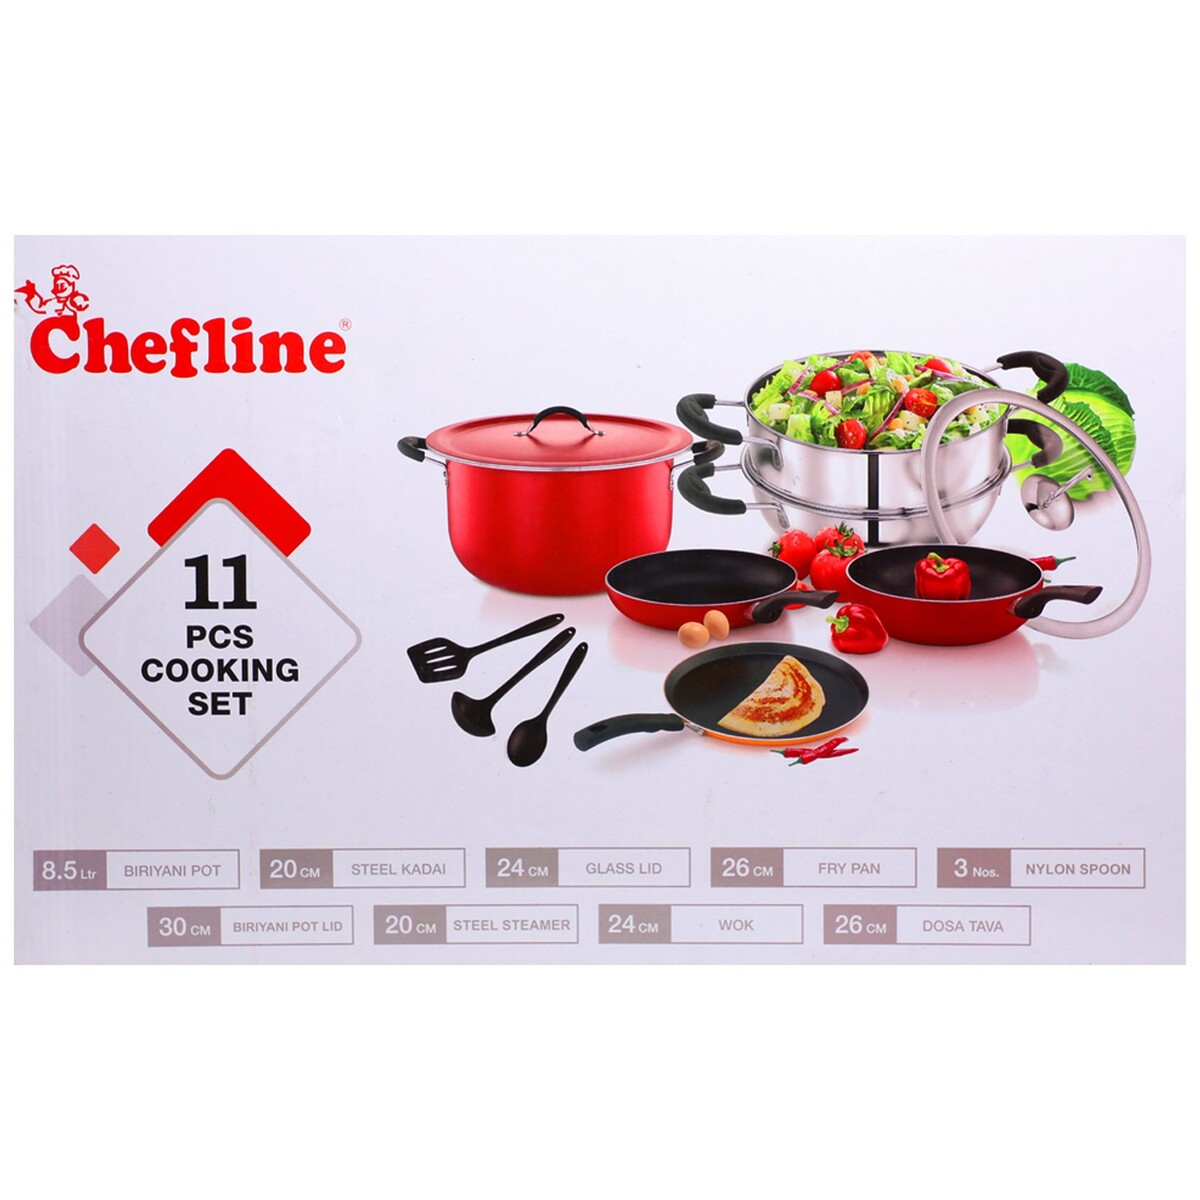 Chefline Cooking Set 11 PC